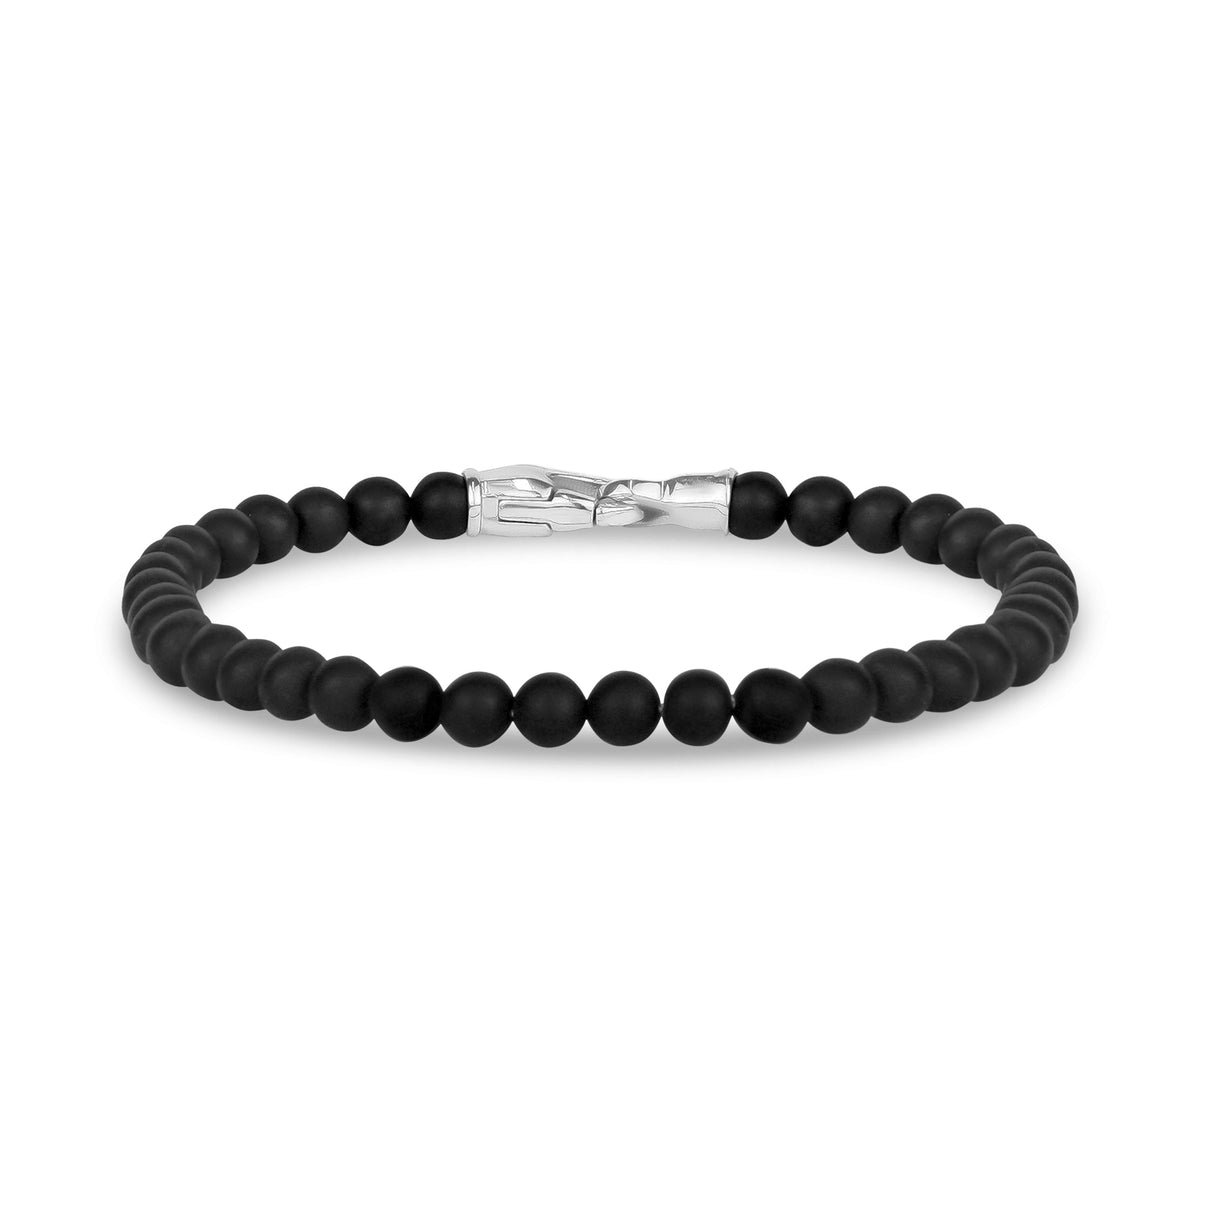 Bracelet de perles noir mat avec fermoir en acier de 4 mm - Bracelets de perles en acier pour hommes - The Steel Shop